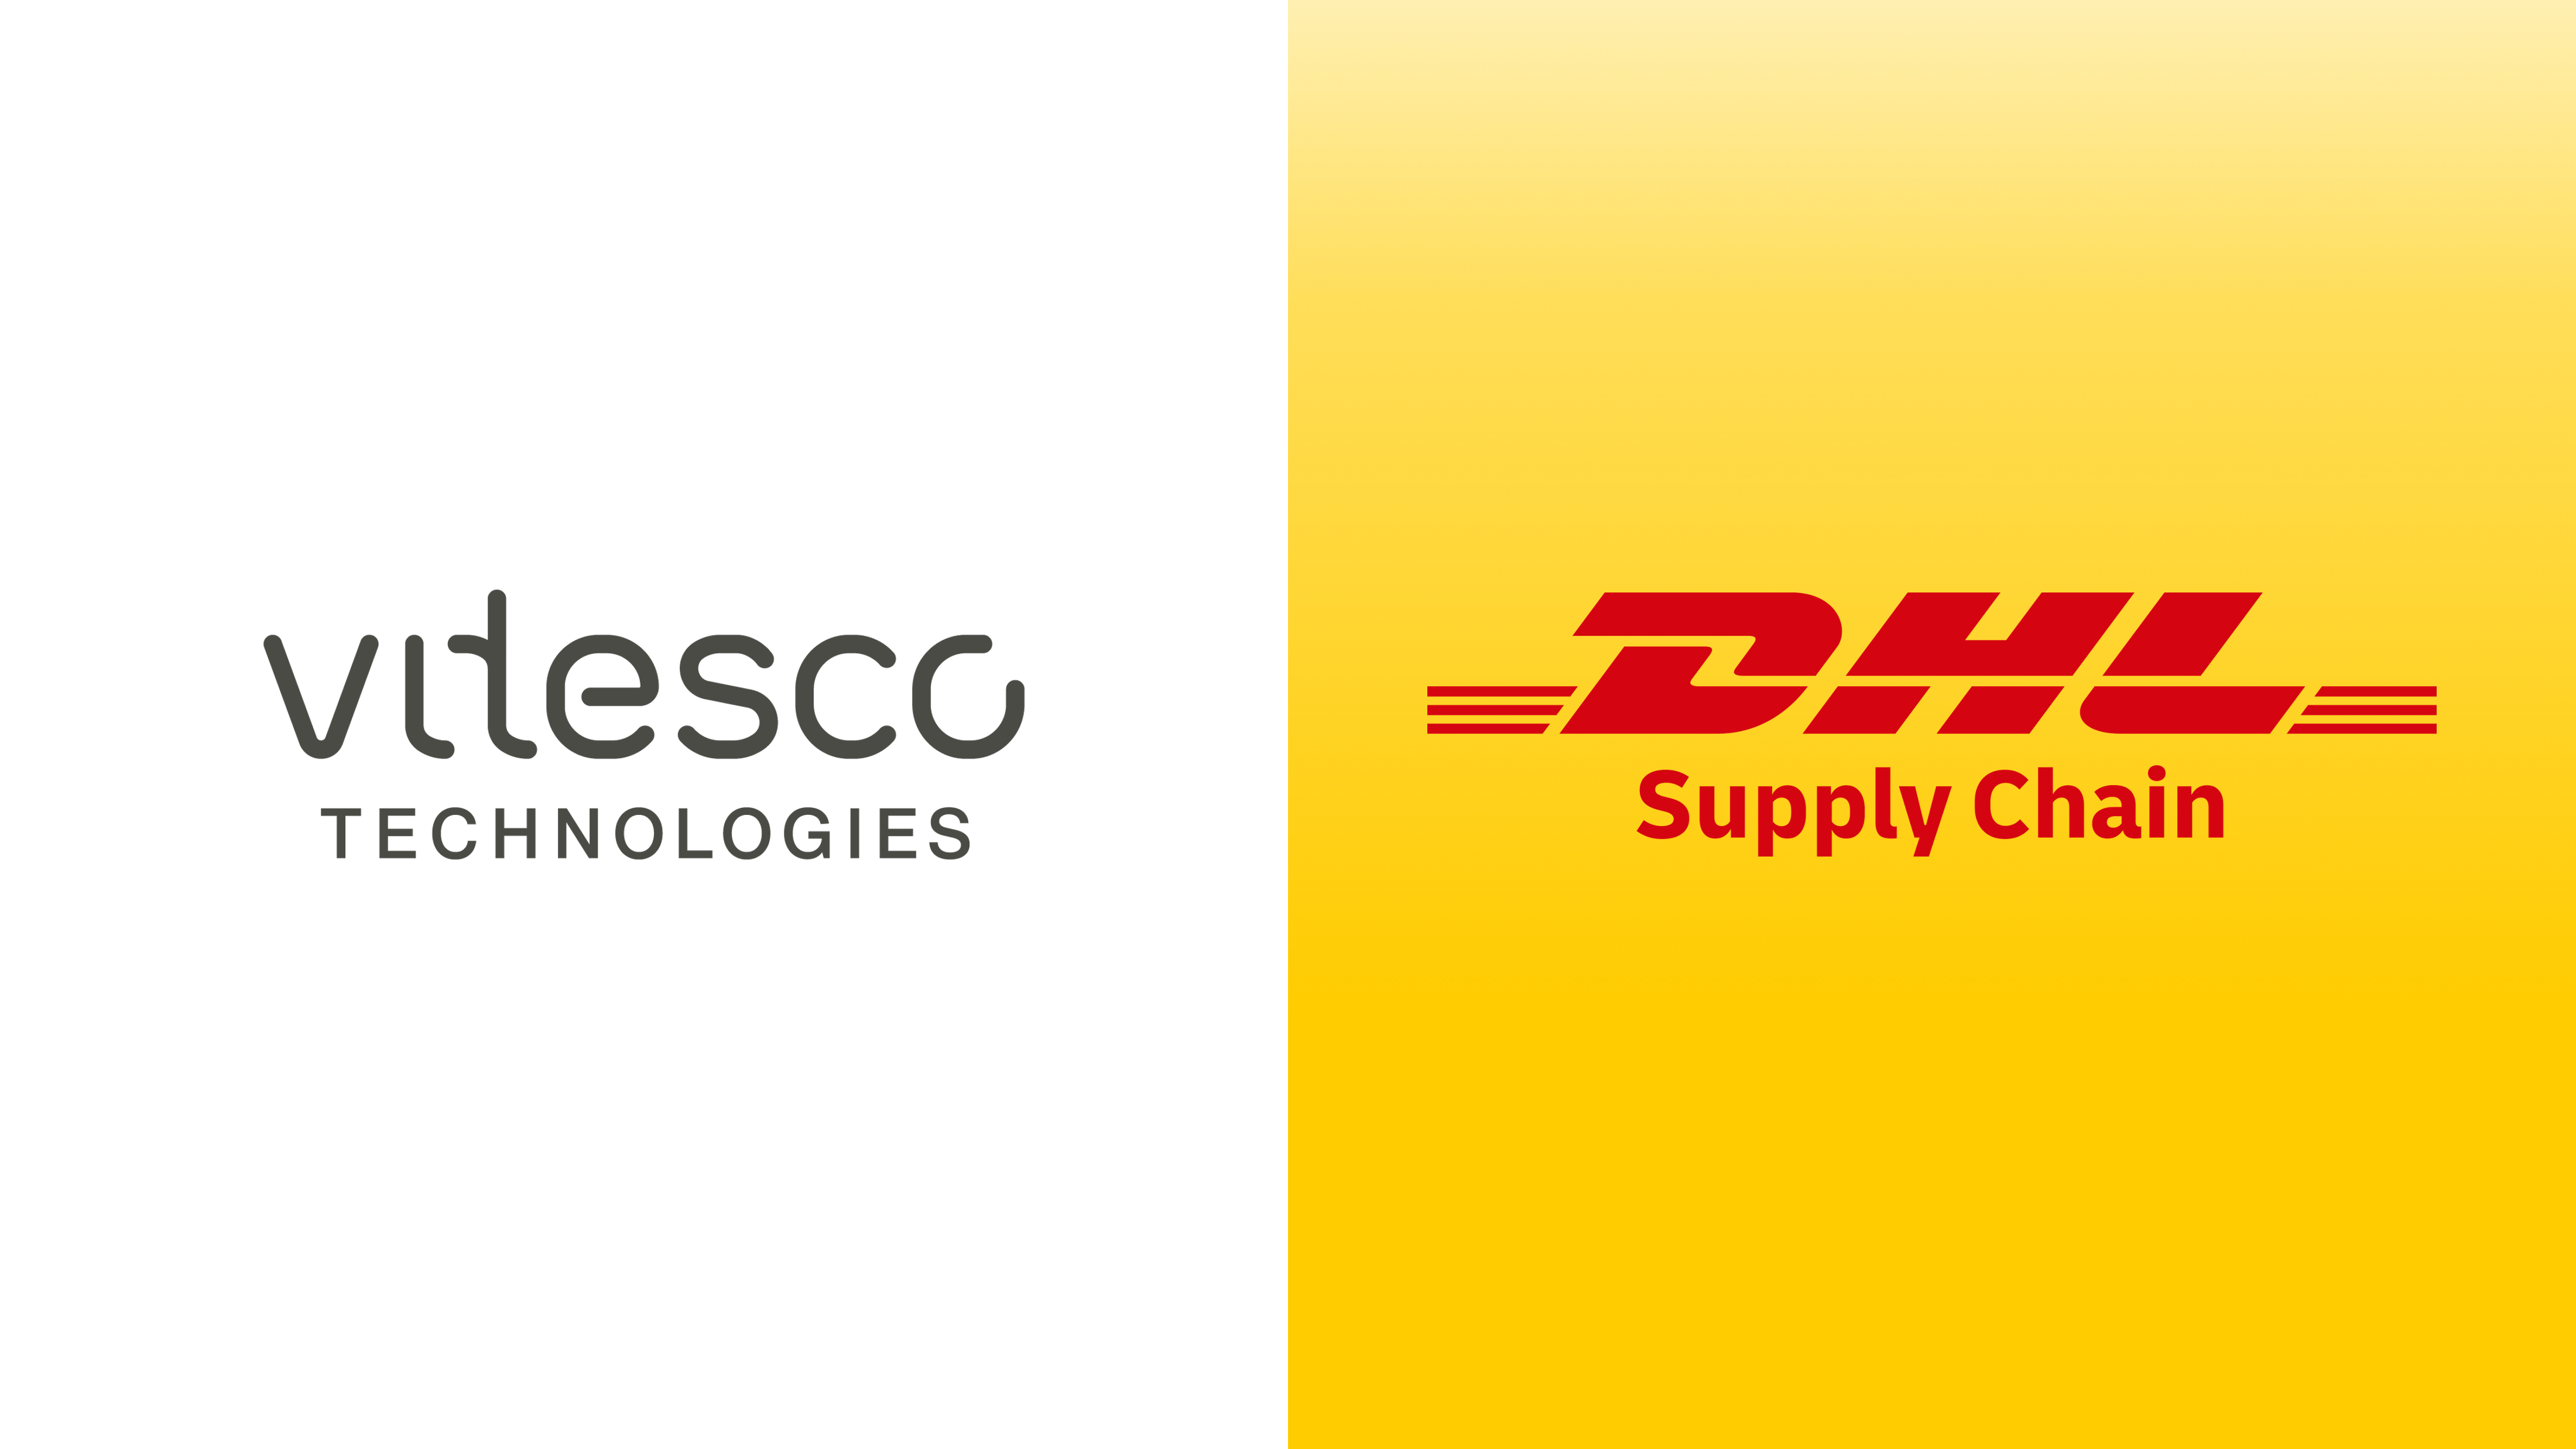 Vitesco Technologies and DHL enter into strategic partnership